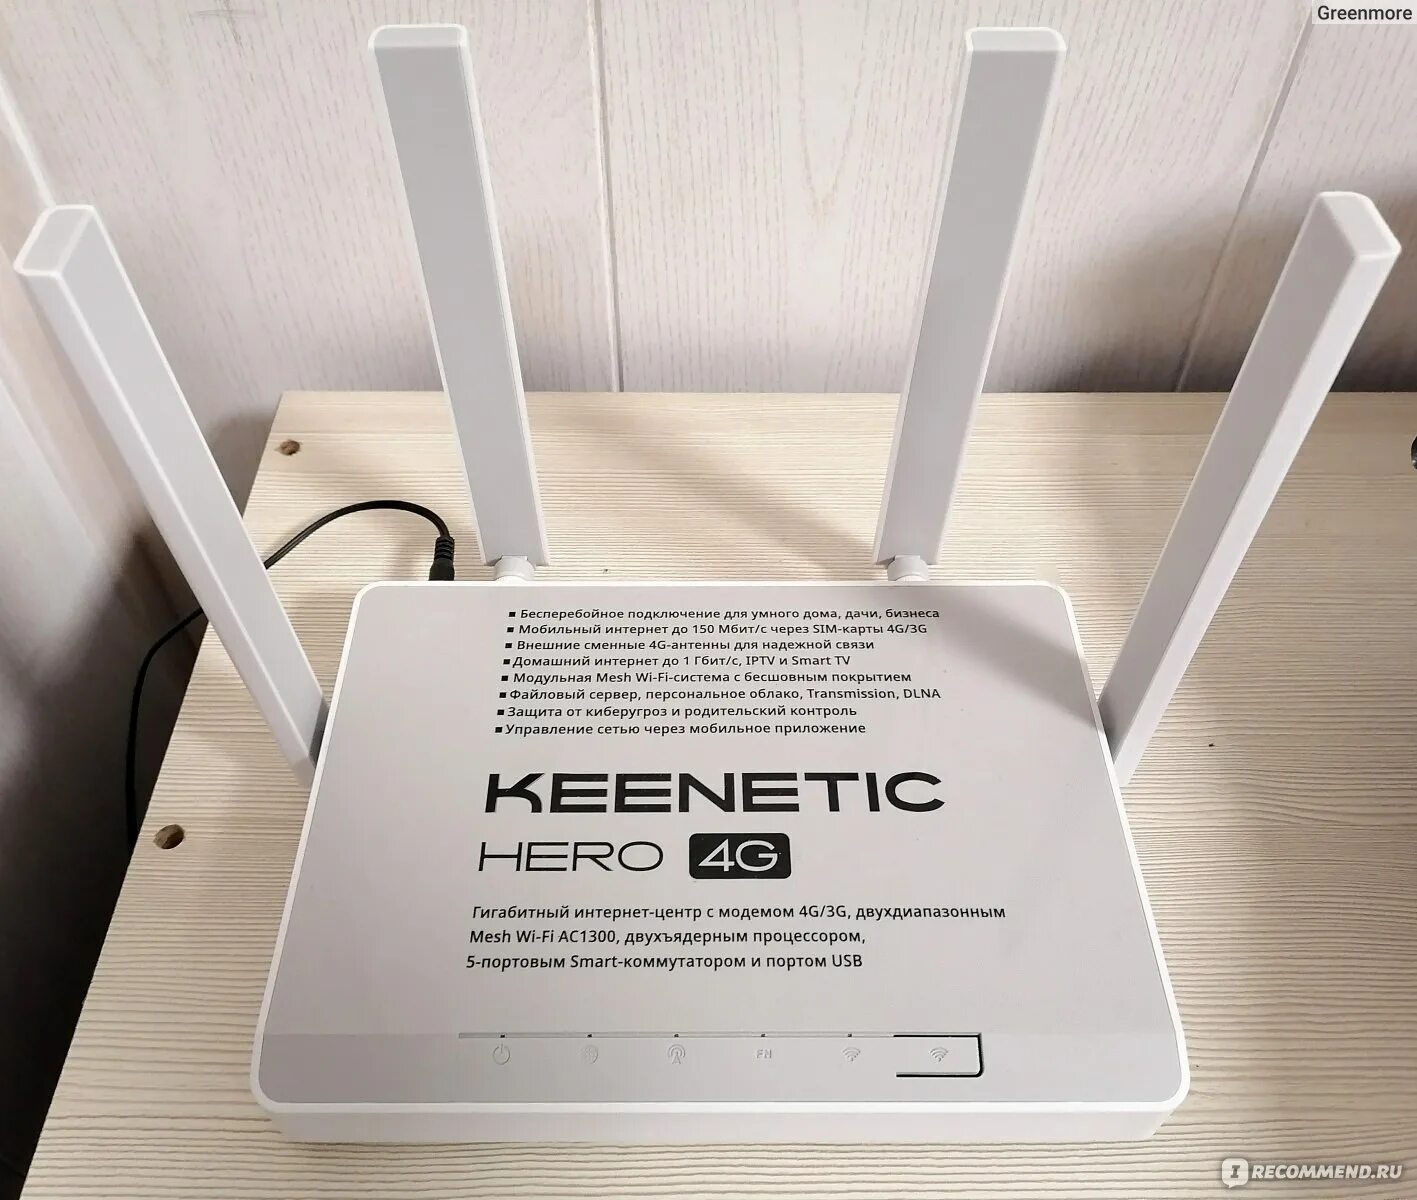 Hero 4g kn 2310. Роутер Keenetic Hero 4g [KN-2310]. Keenetic Hero 4g ac1300. Wi-Fi роутер Keenetic 4g (KN-1212).